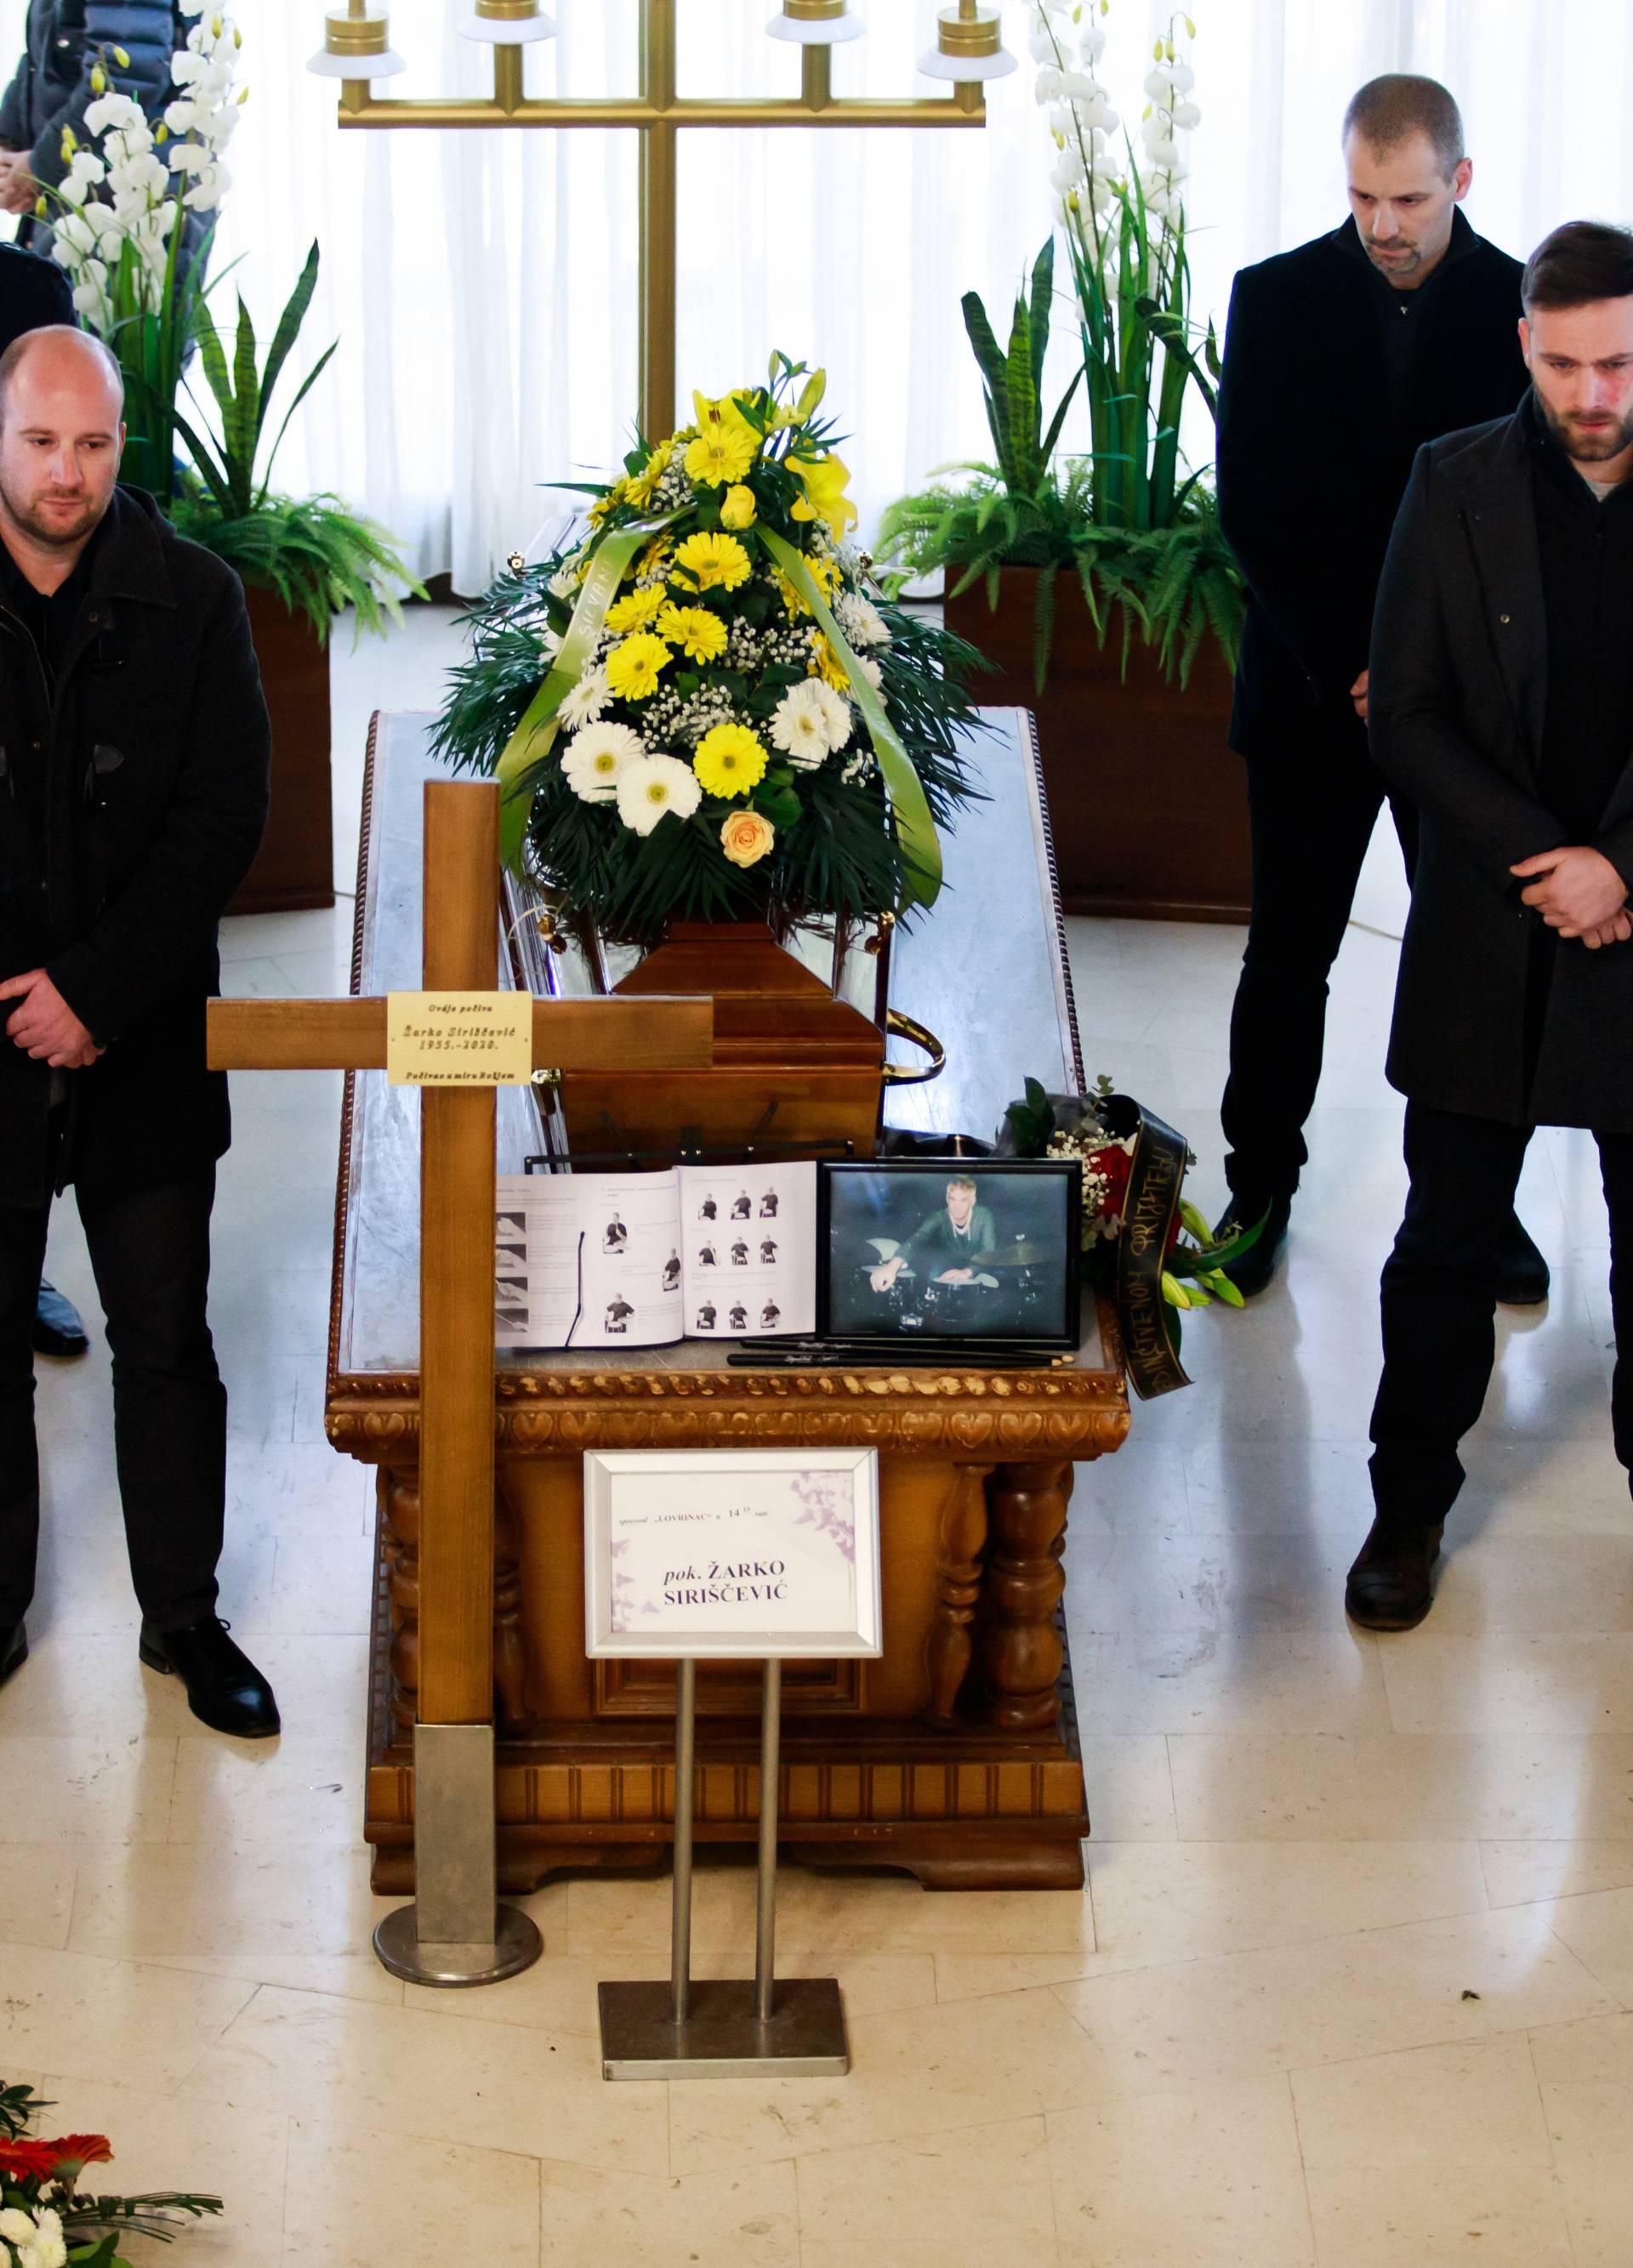 Pogreb splitskog glazbenika Zarka Siriscevica